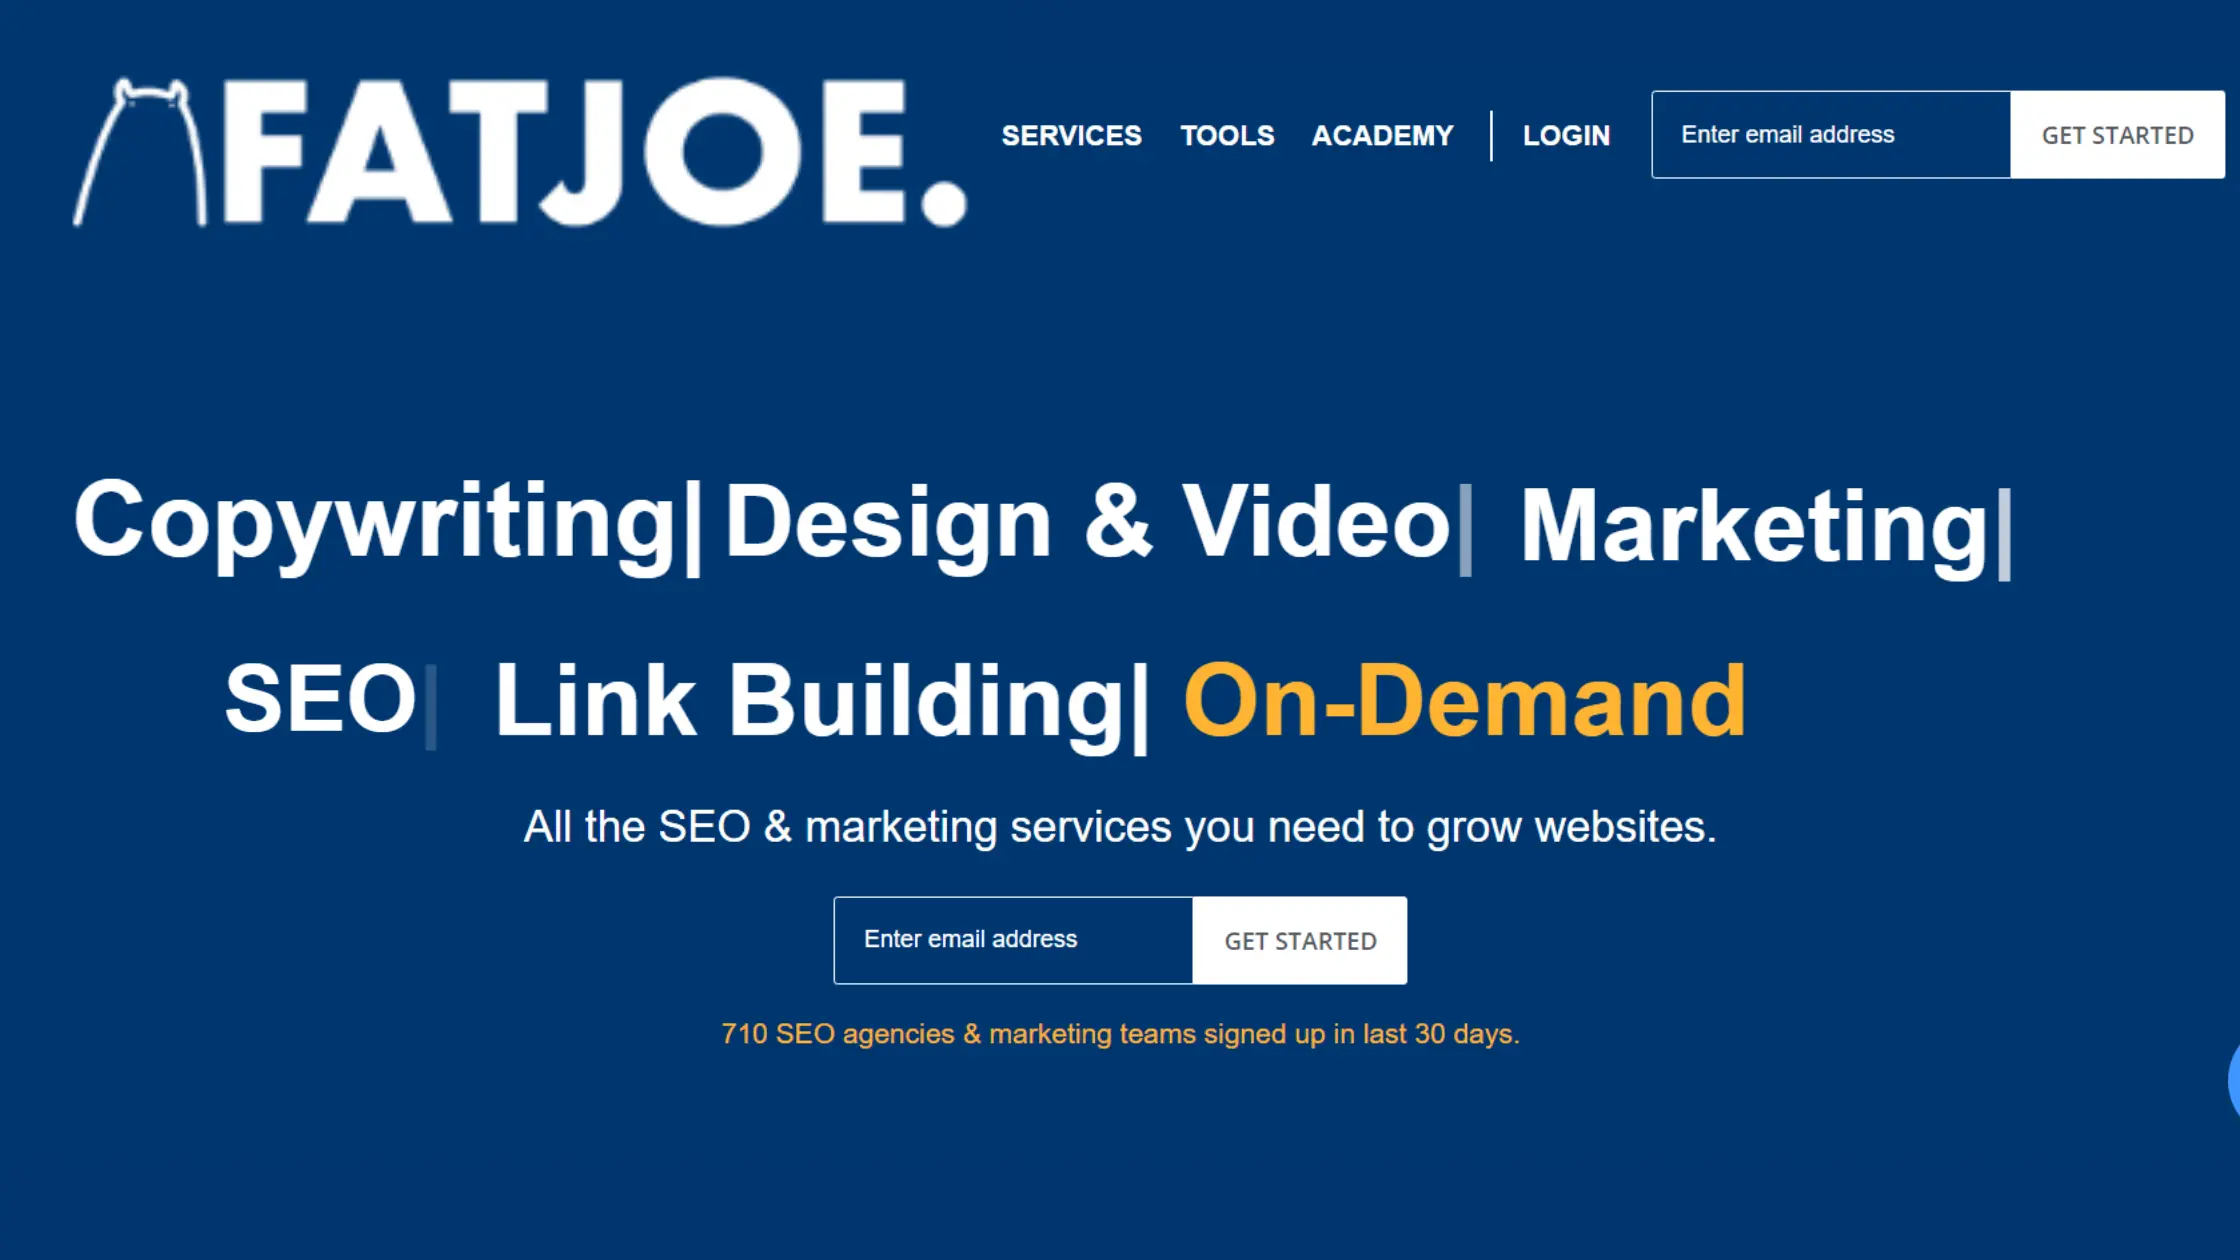 FatJoe Review - SEO and Marketing Services